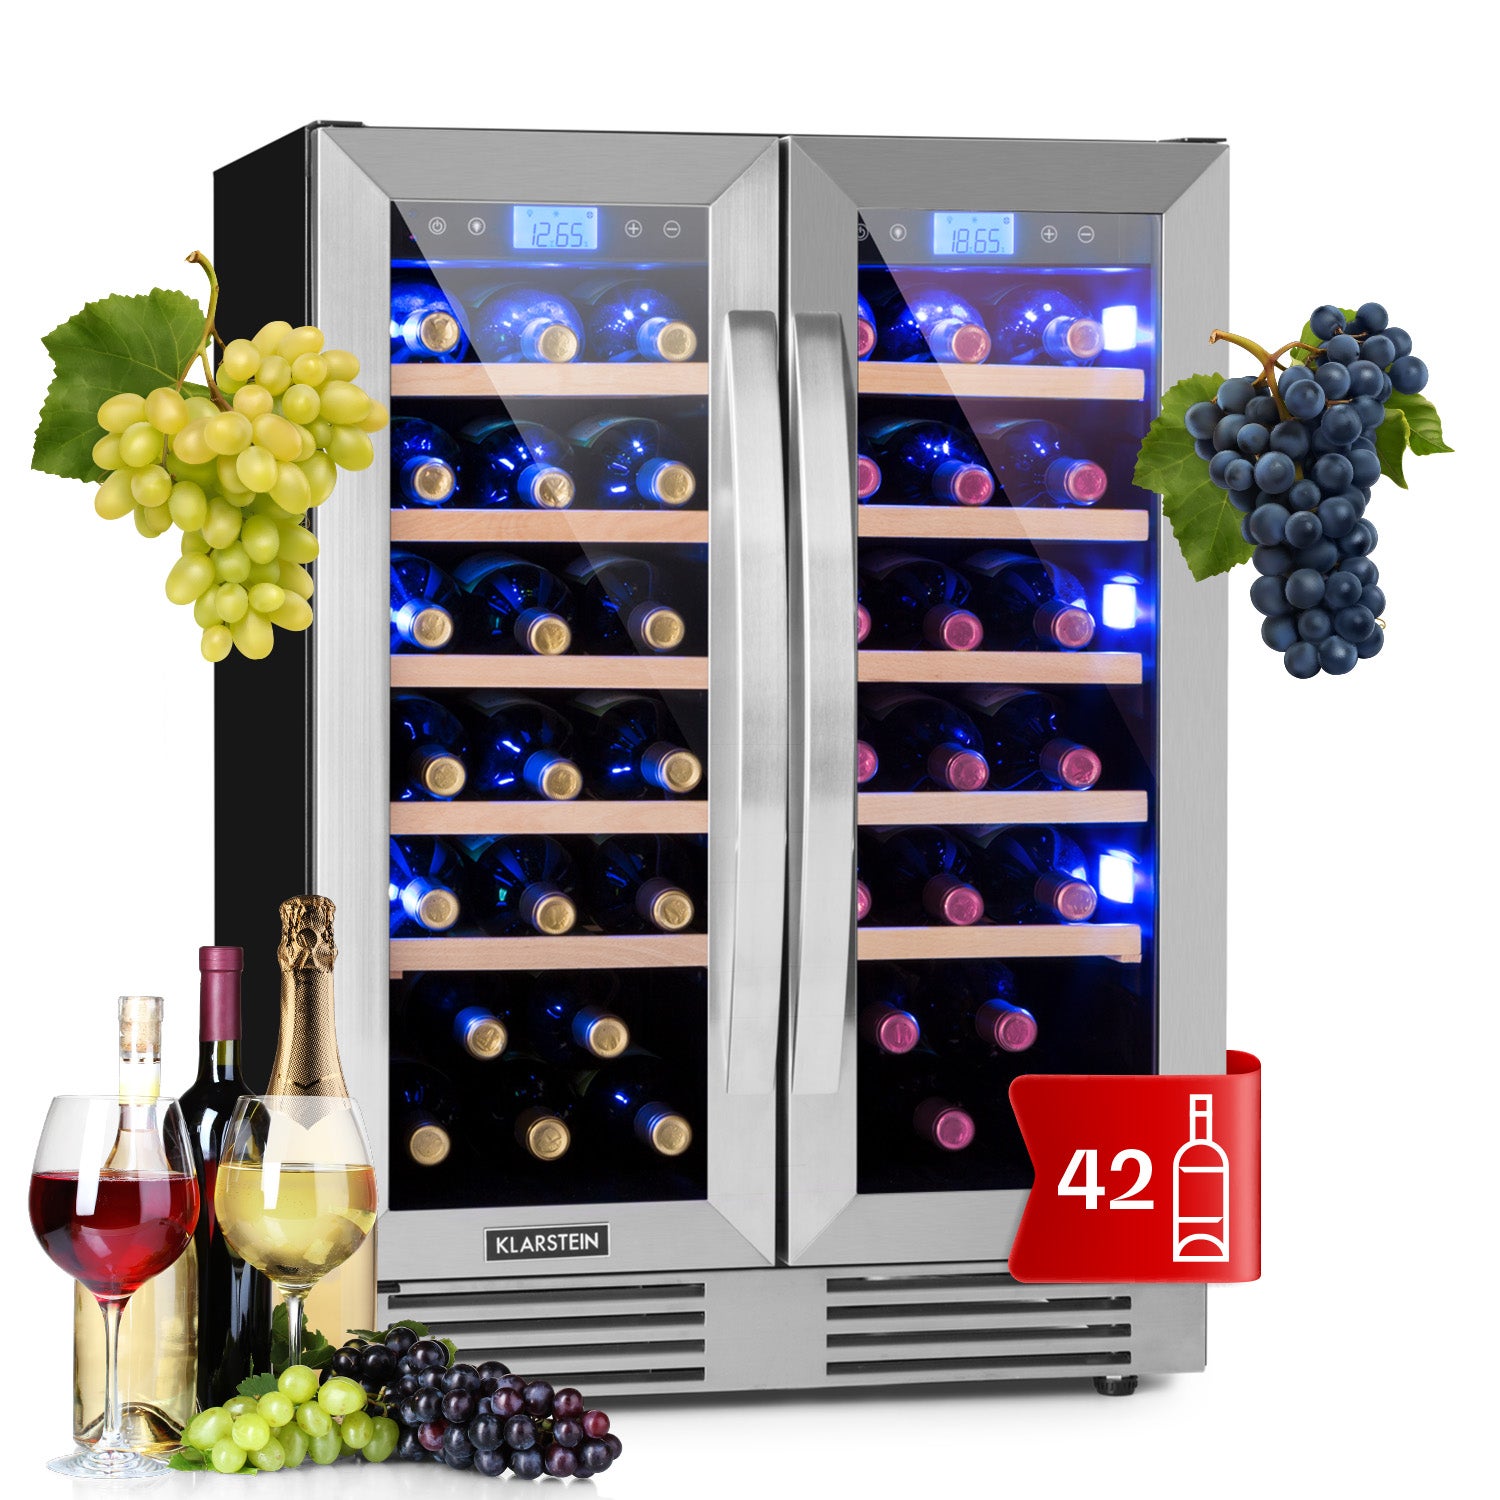 Touch Control 2 Cooling Zones Adjustable Temperature 5-20 Degrees Wine Refrigerator Black 126 L LED Lighting 3 Colours Beverage Fridge 2 x 5 Shelves KLARSTEIN Vinovilla Duo42 